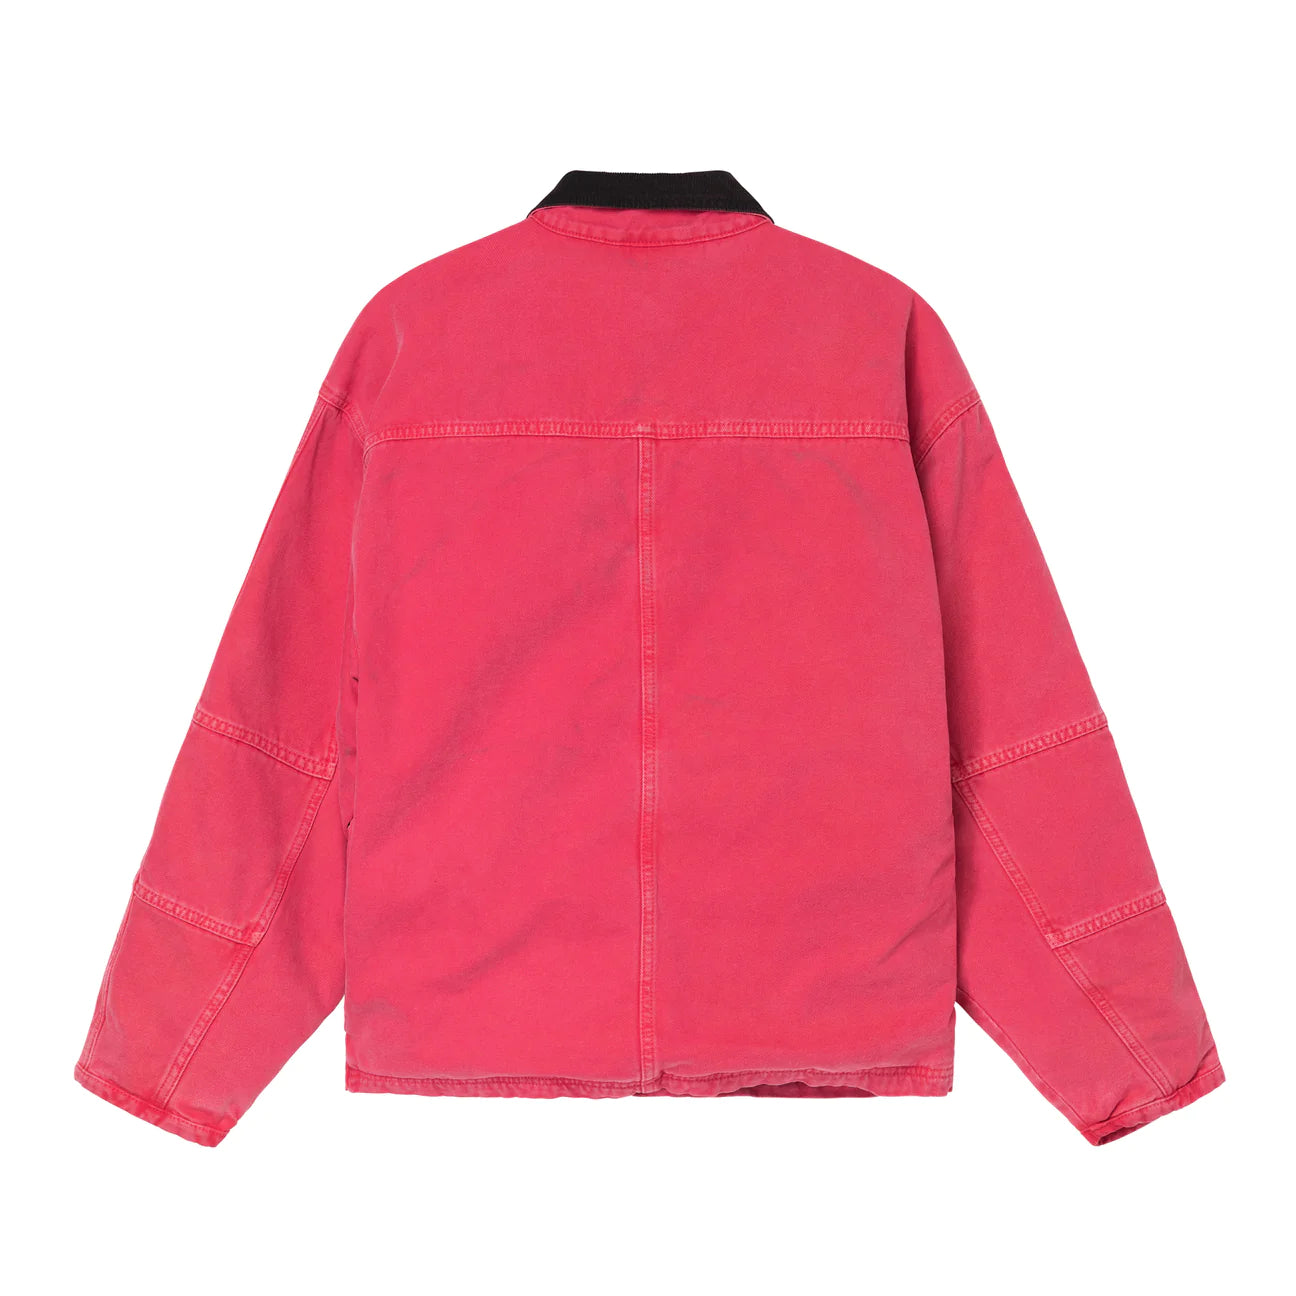 Washed Canvas Shop Jacket Hot Pink